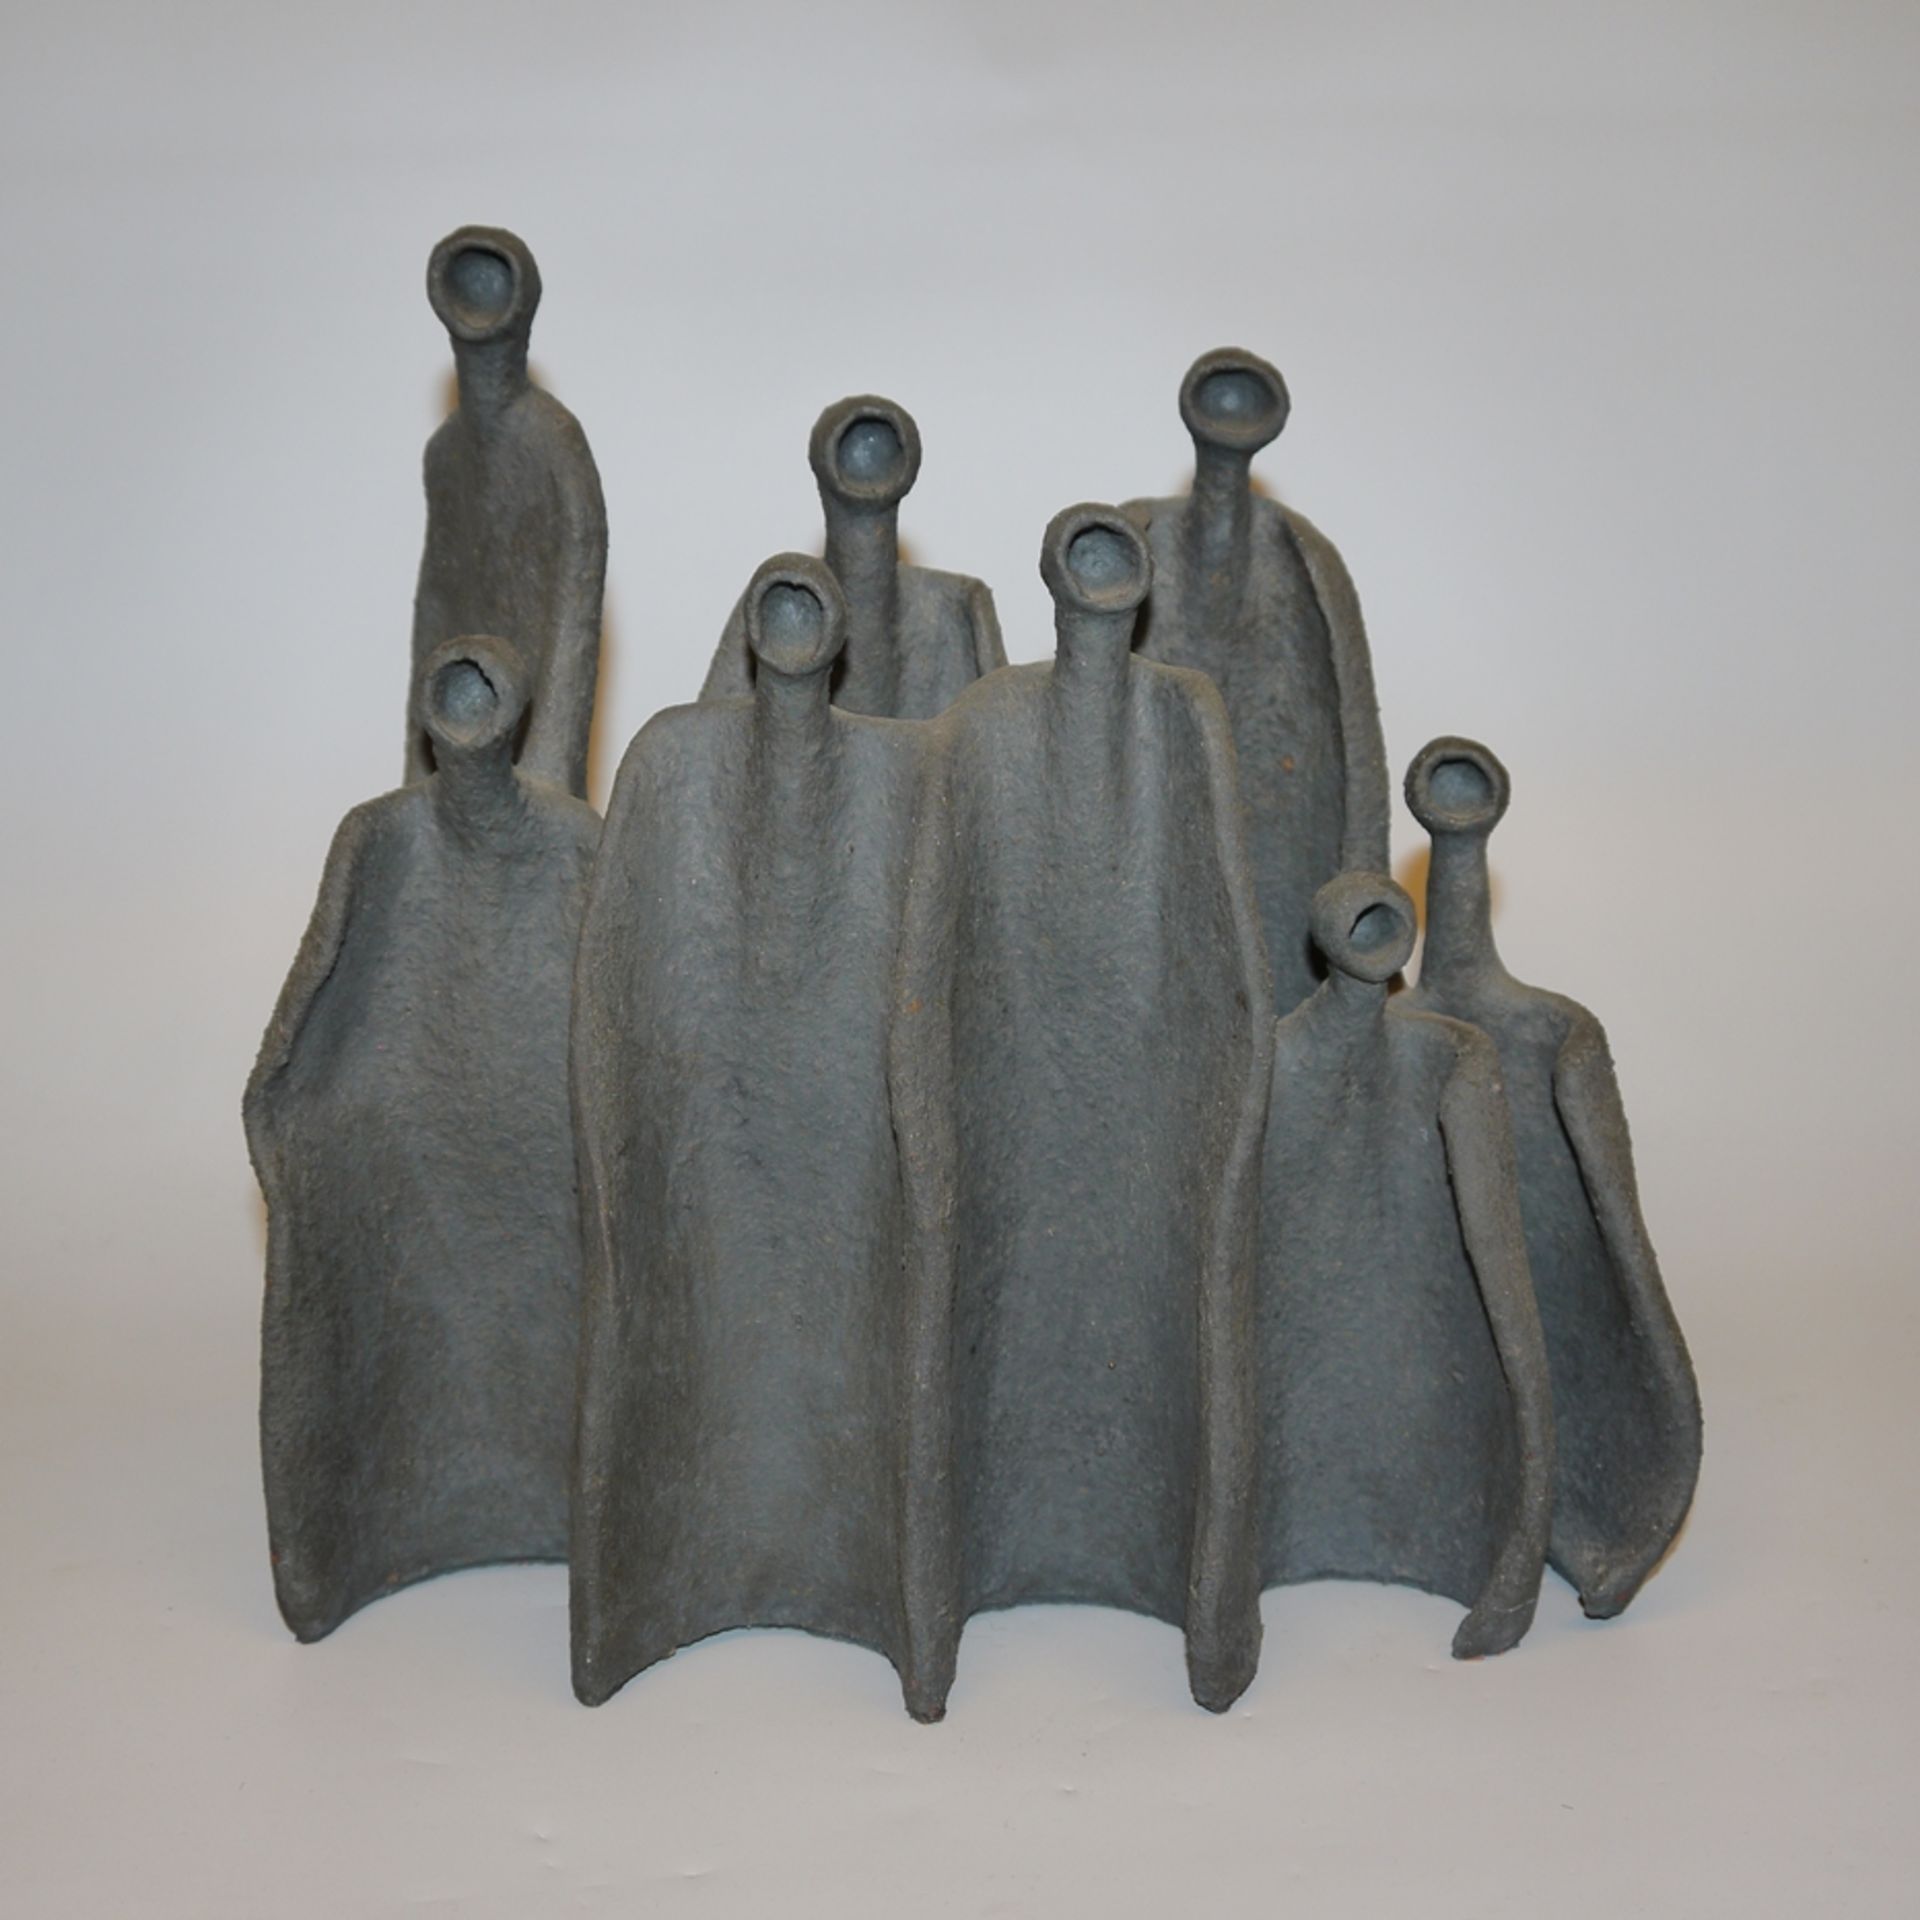 Ingrid Seddig, "Menschengruppe", stoneware sculpture c. 1960/70